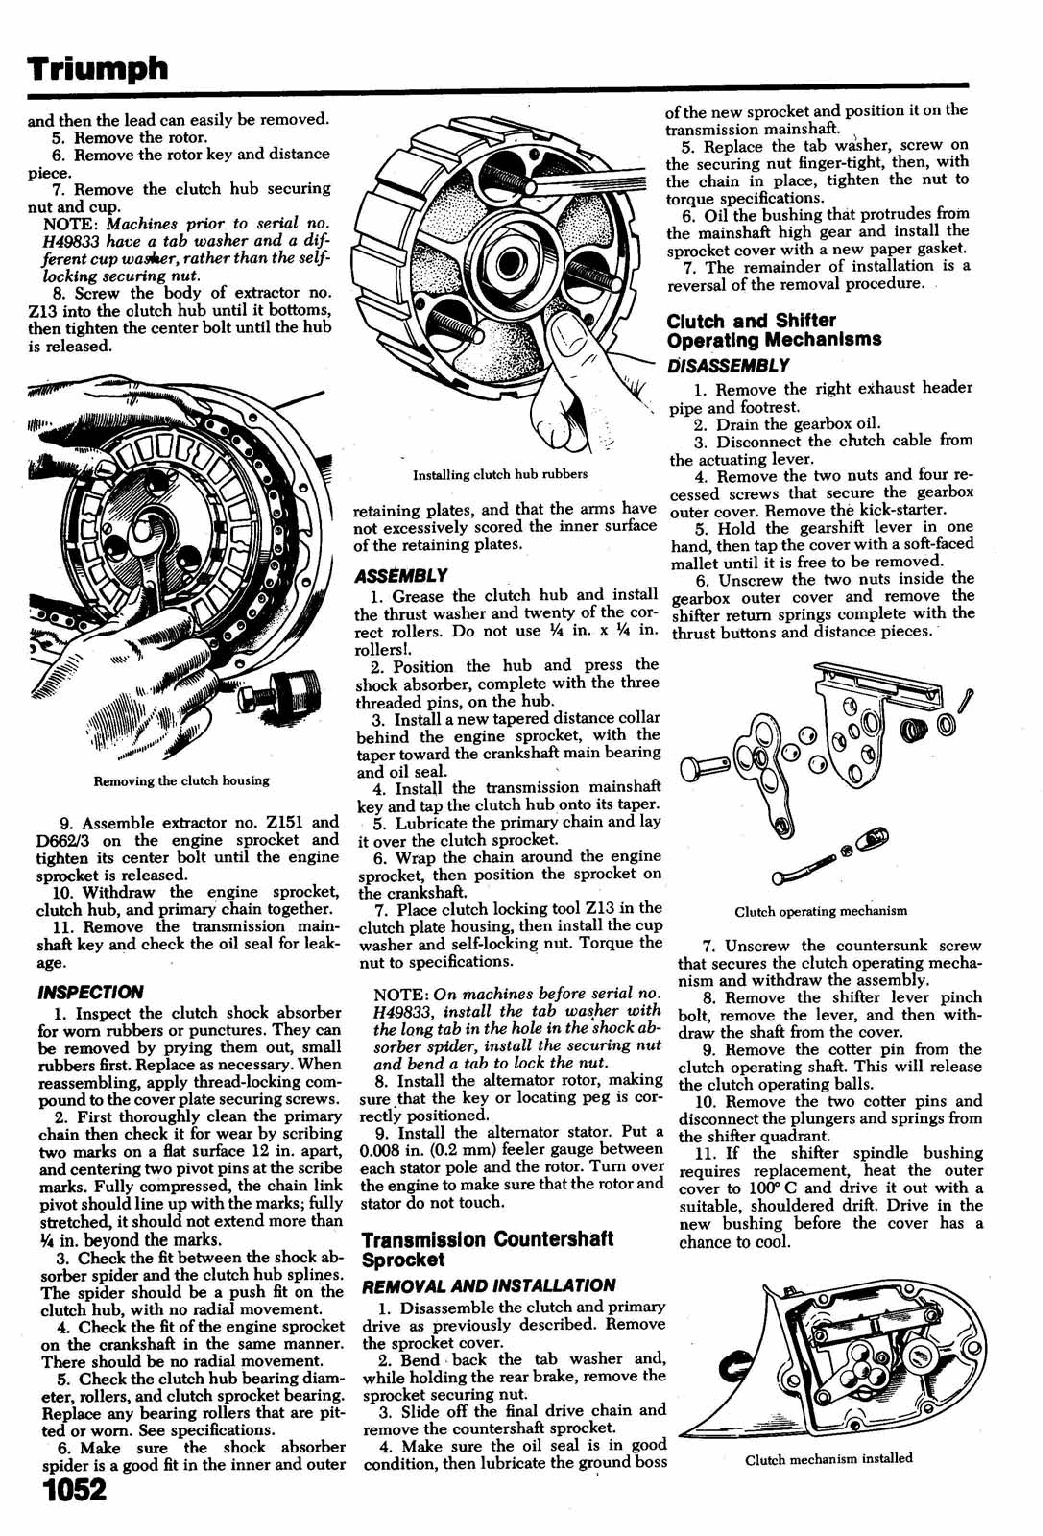 1956-1962 Triumph Speed Twin 5T Service Manual